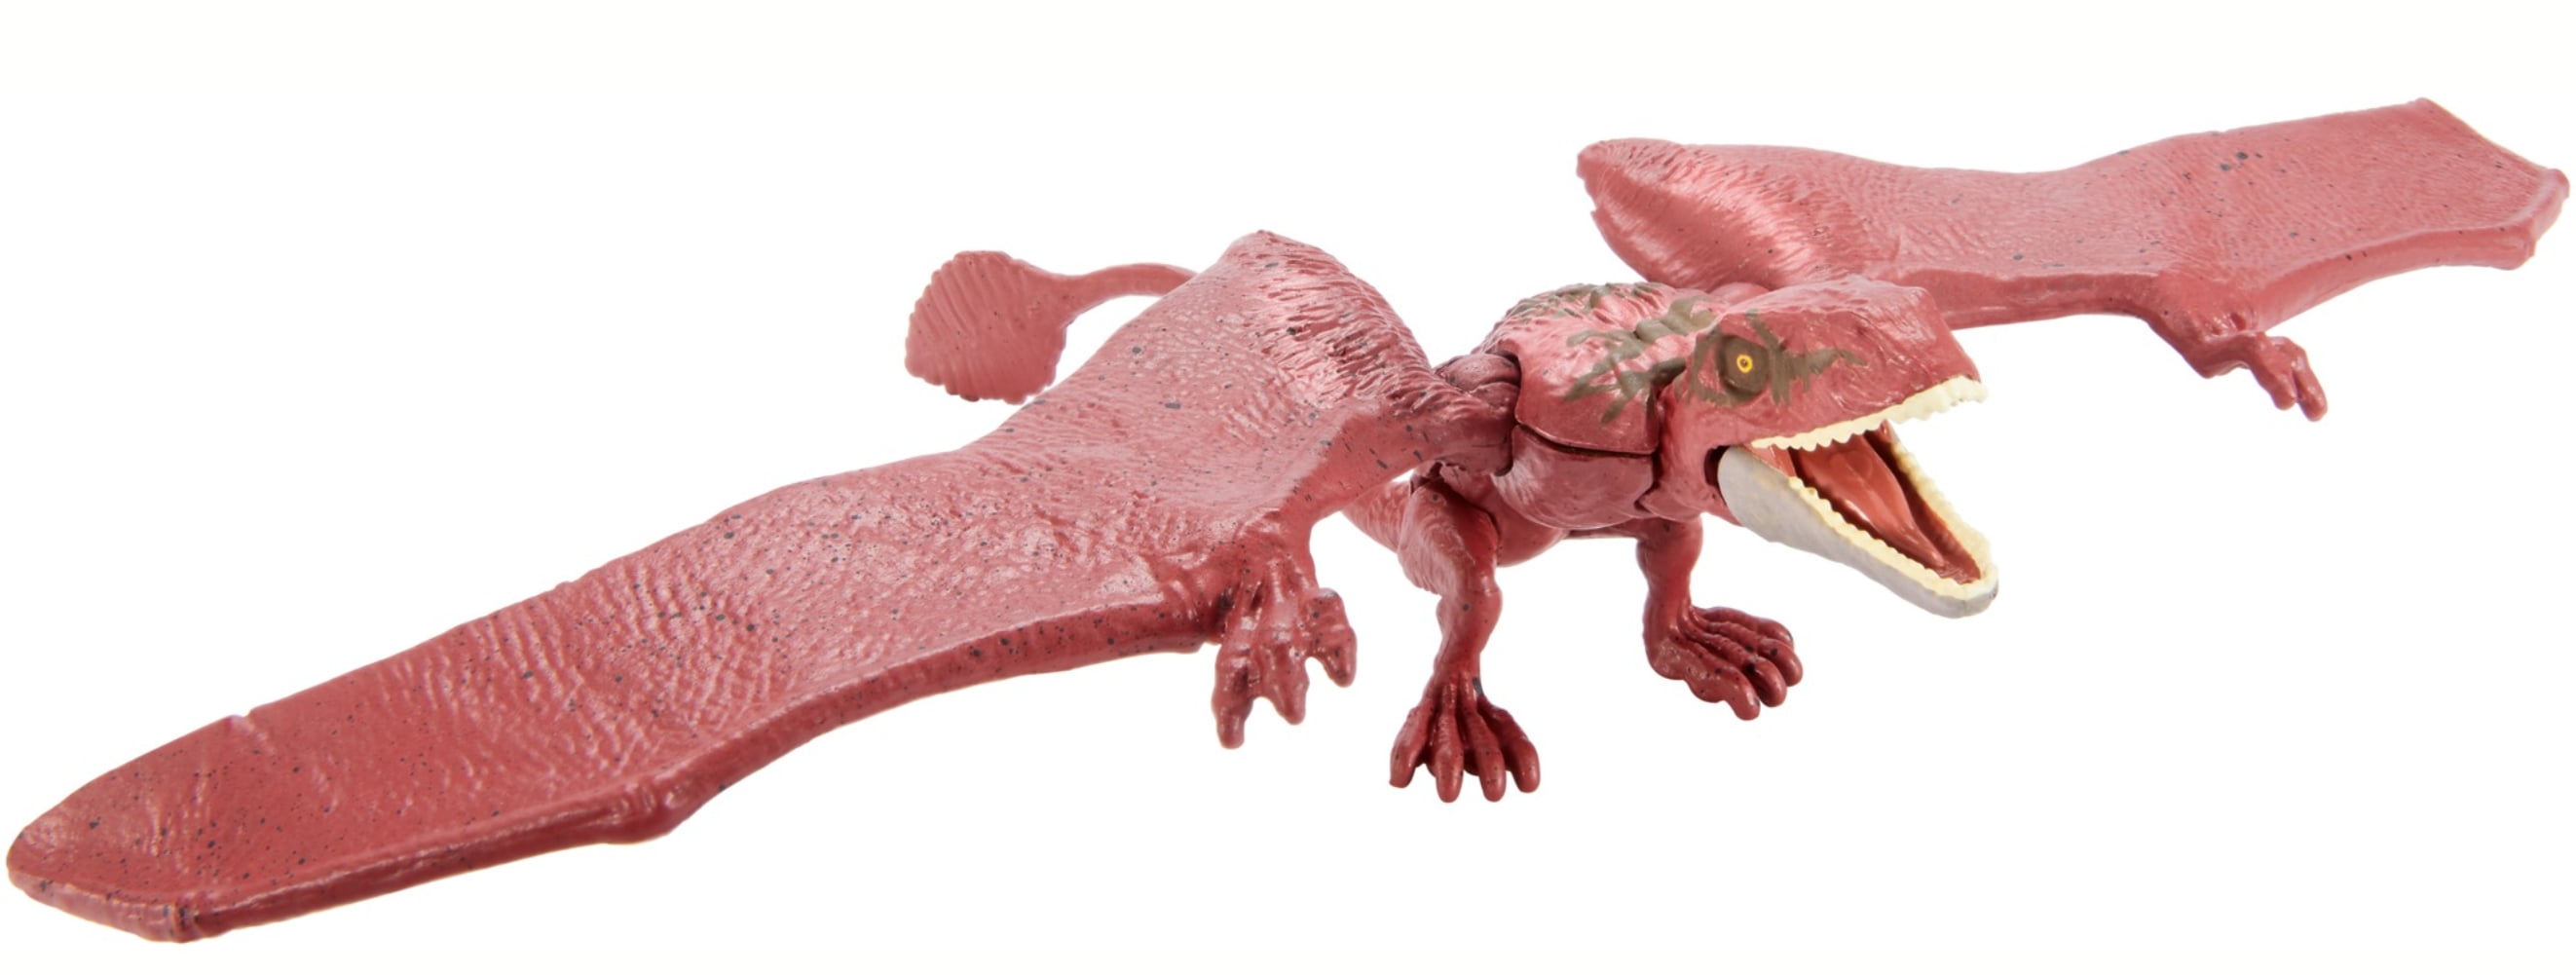 Mattel Jurassic World Camp Cretaceous Dimorphodon 2020 Figure Dinosaur for sale online 